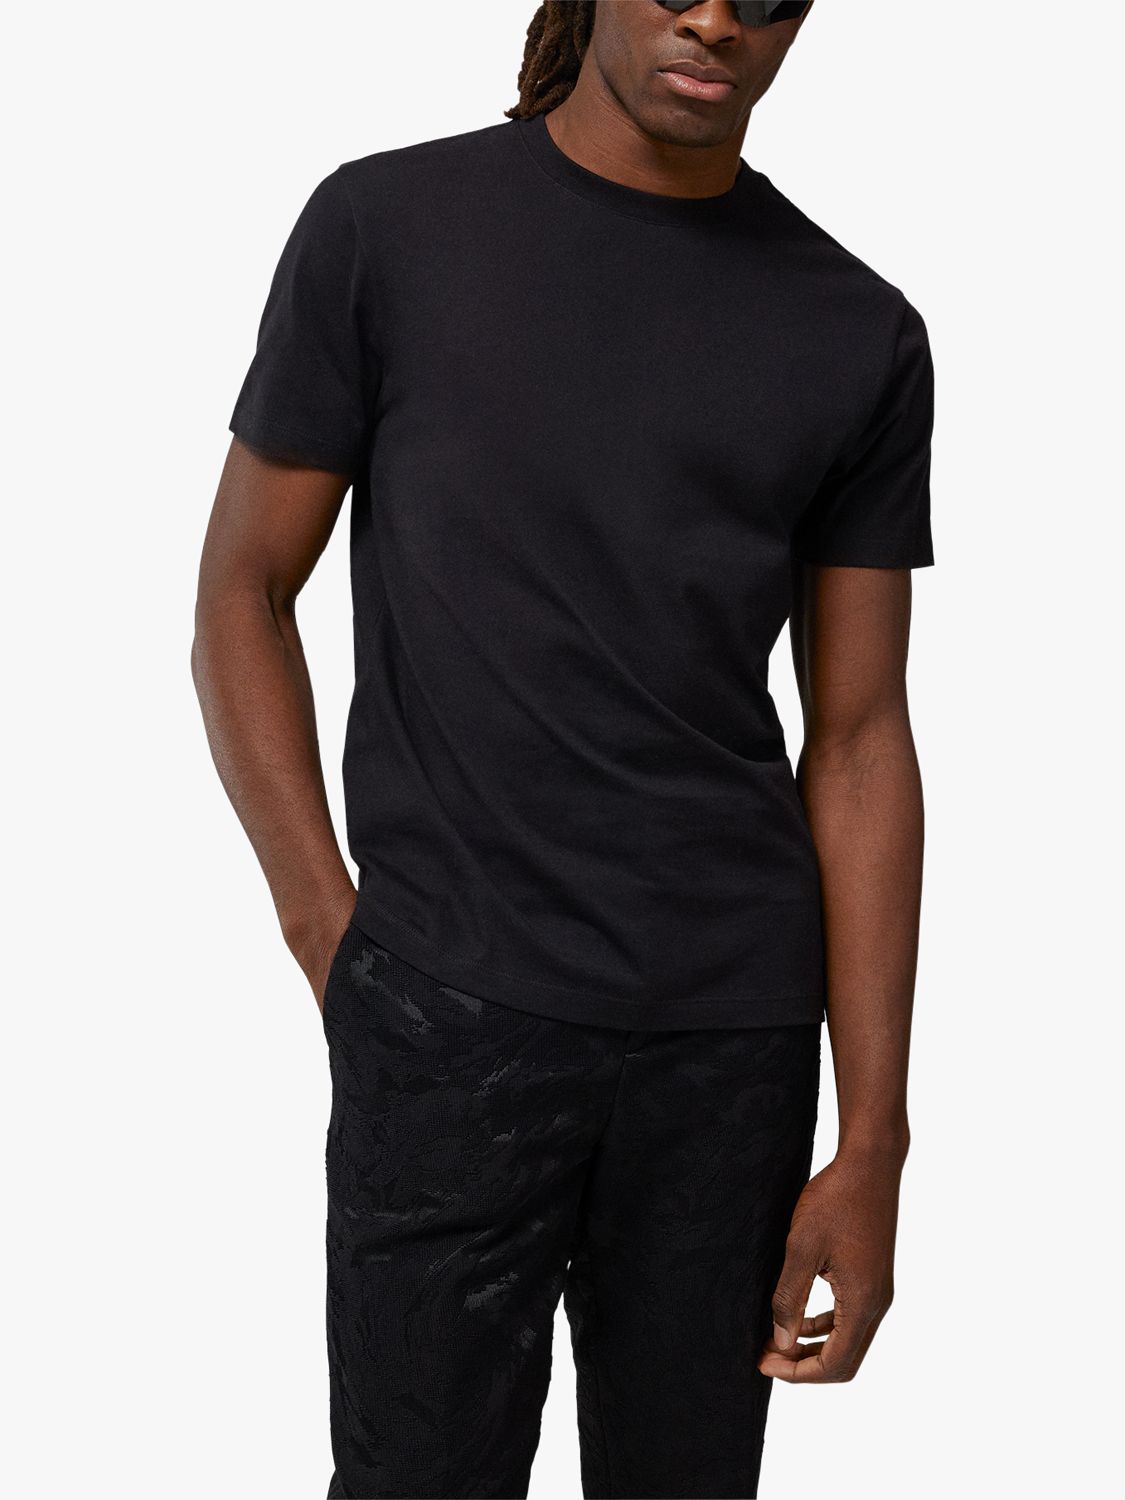 J.Lindeberg Sid Basic T-Shirt, Black at John Lewis & Partners